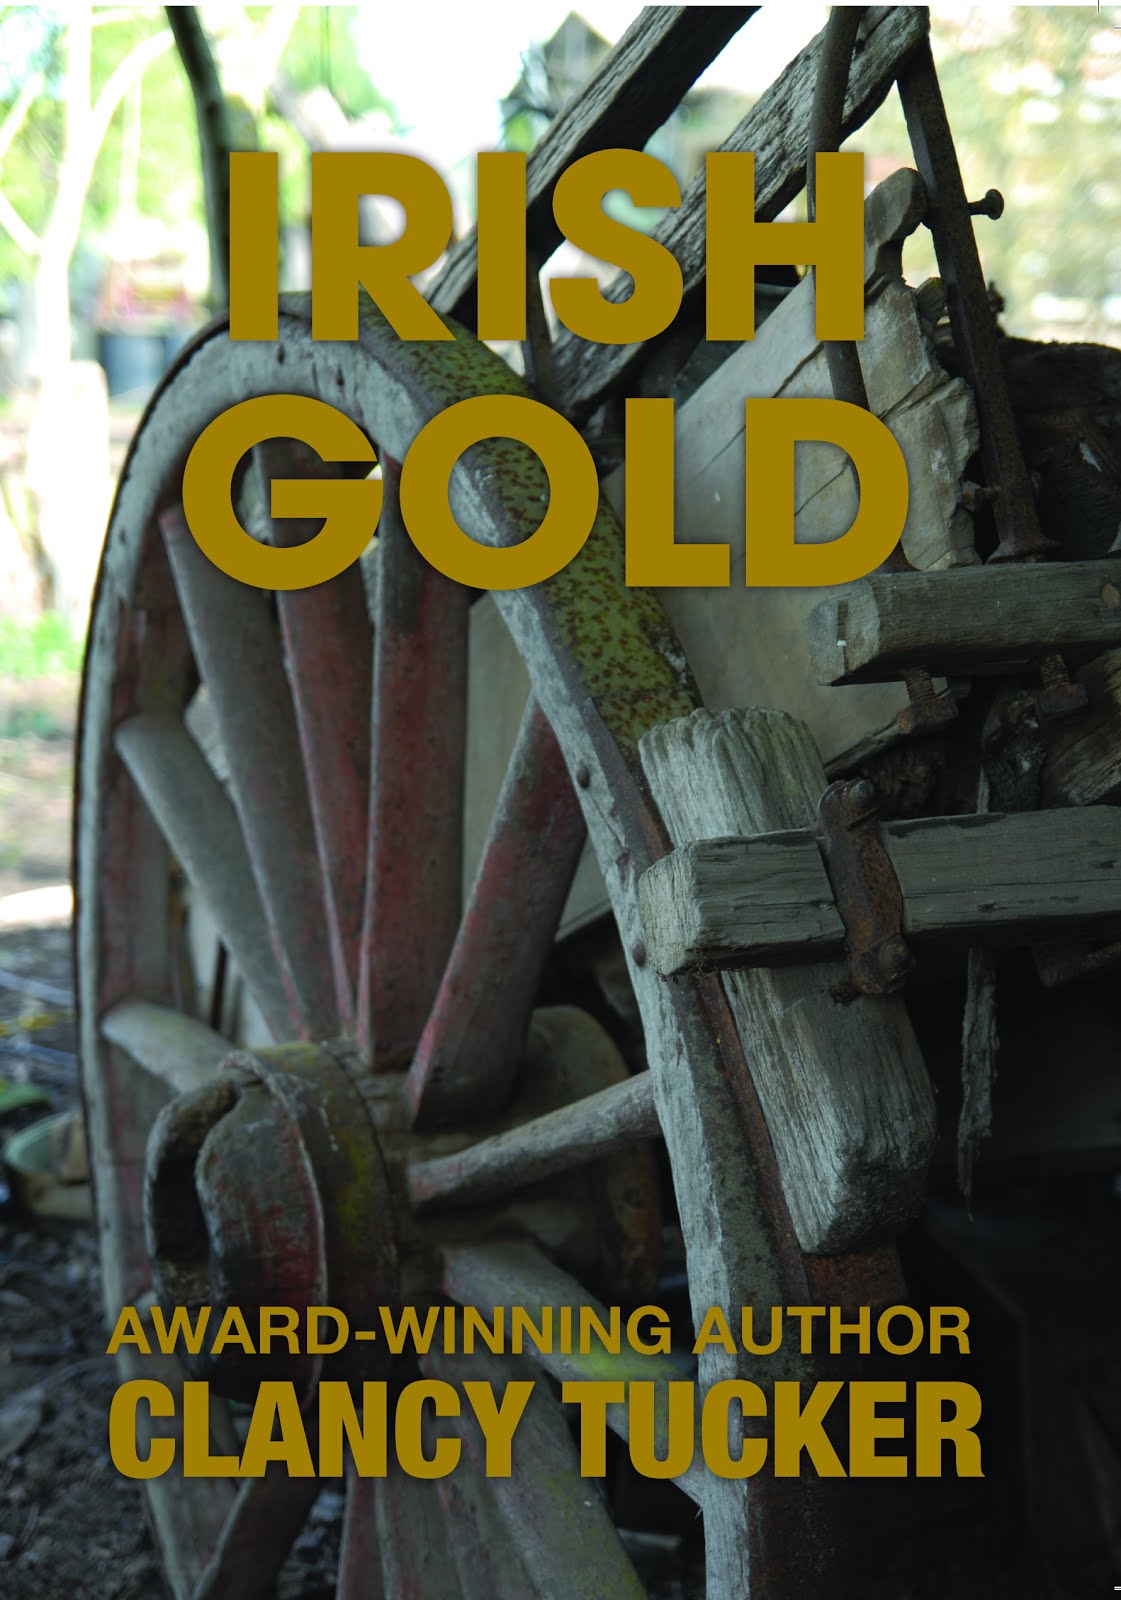 'IRISH GOLD' PAPERBACK IN AUSTRALIA